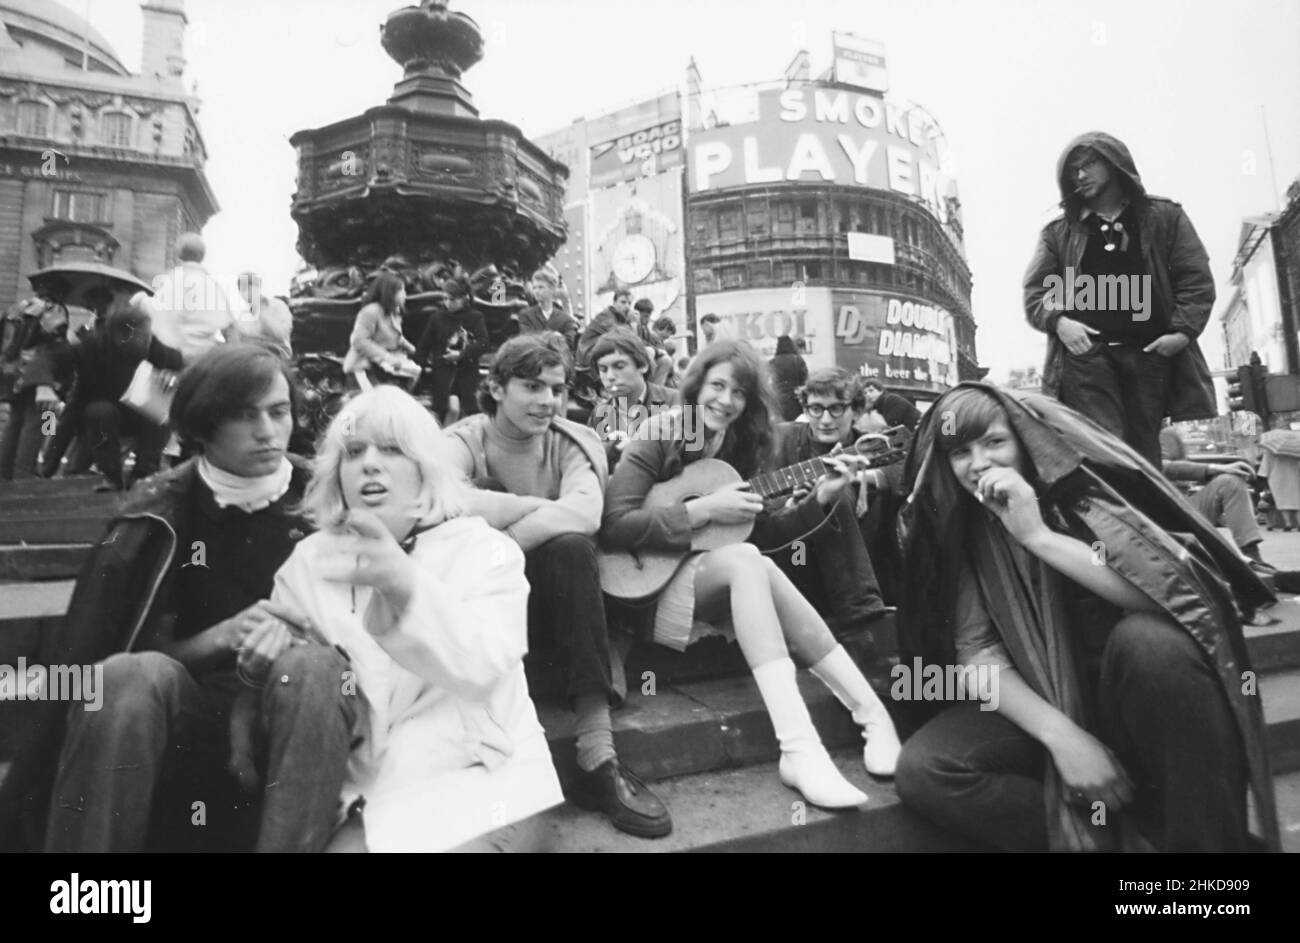 Vashti Bunyan playing guitar and singing at Piccadilly Circus, 1966 Stock Photo